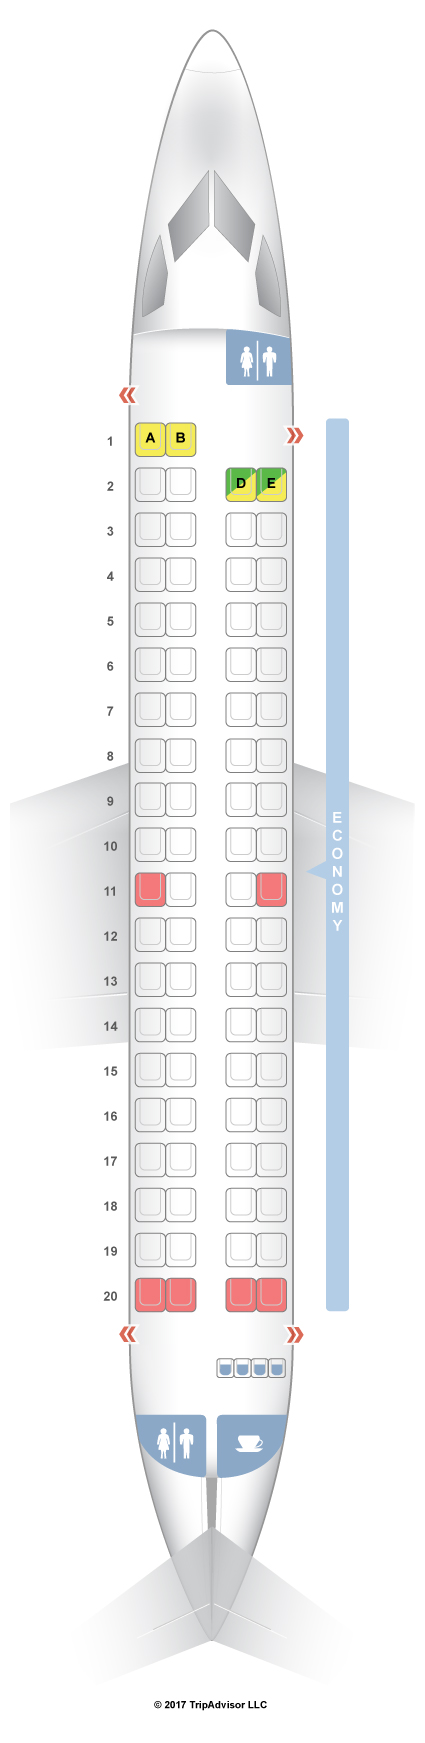 Indigo Flight Seat Chart